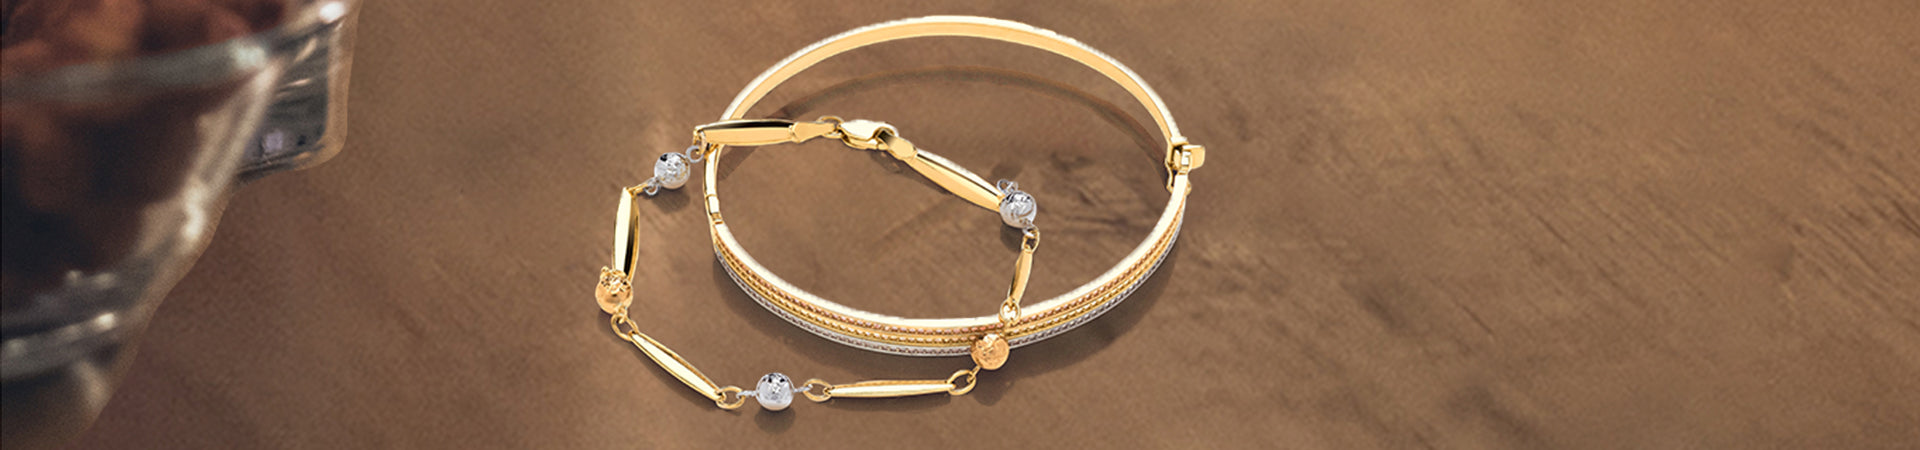 Gold Bracelets and Bangles